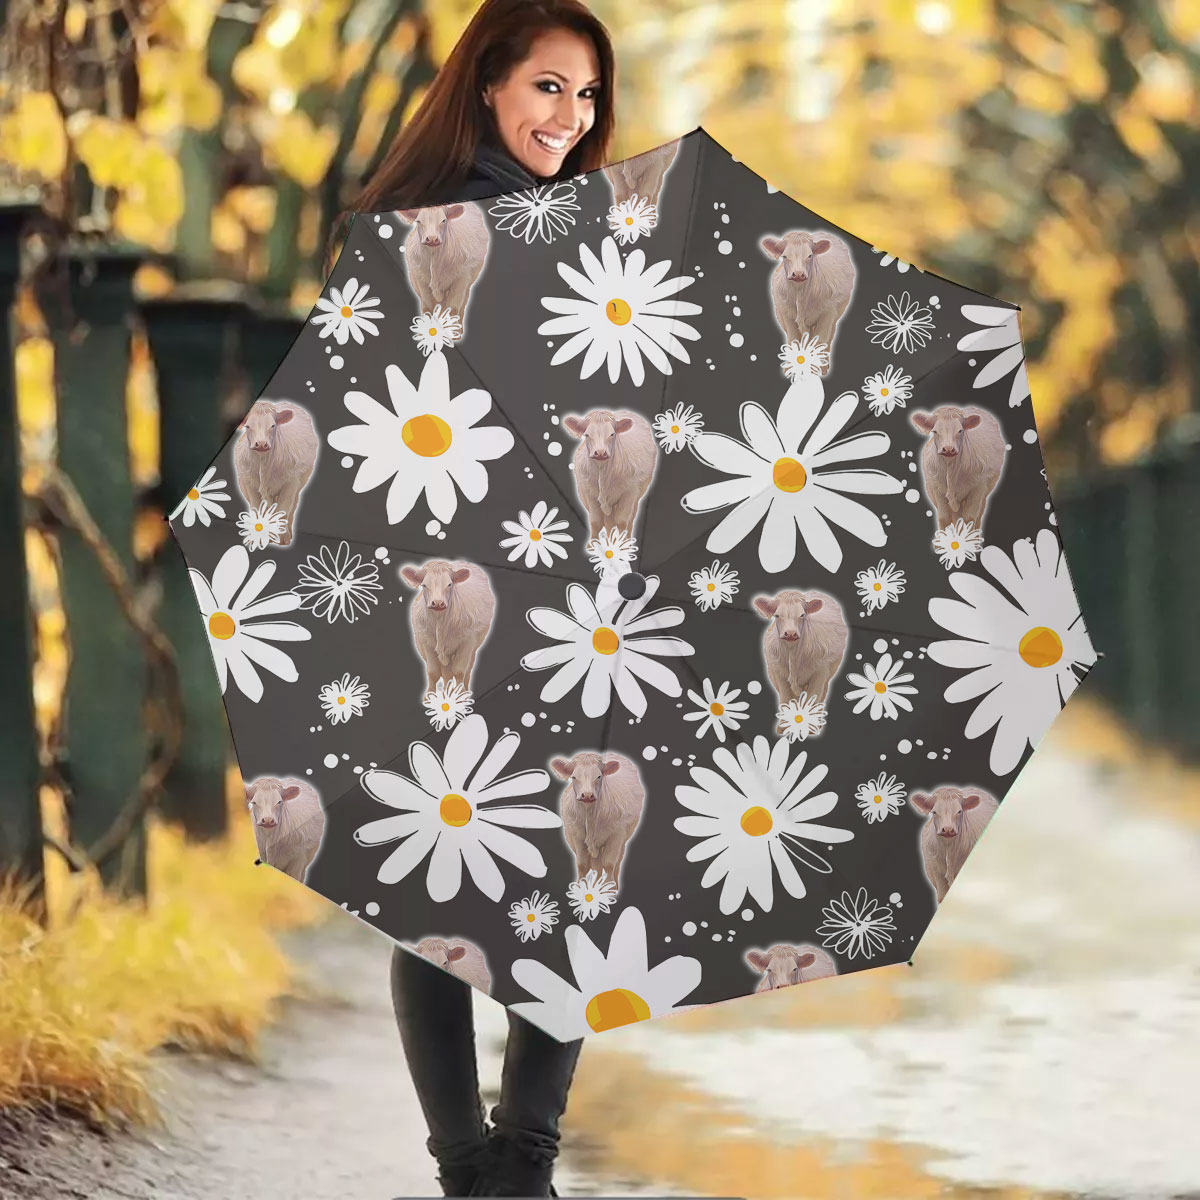 Charolais Daisy Flower Pattern Umbrella